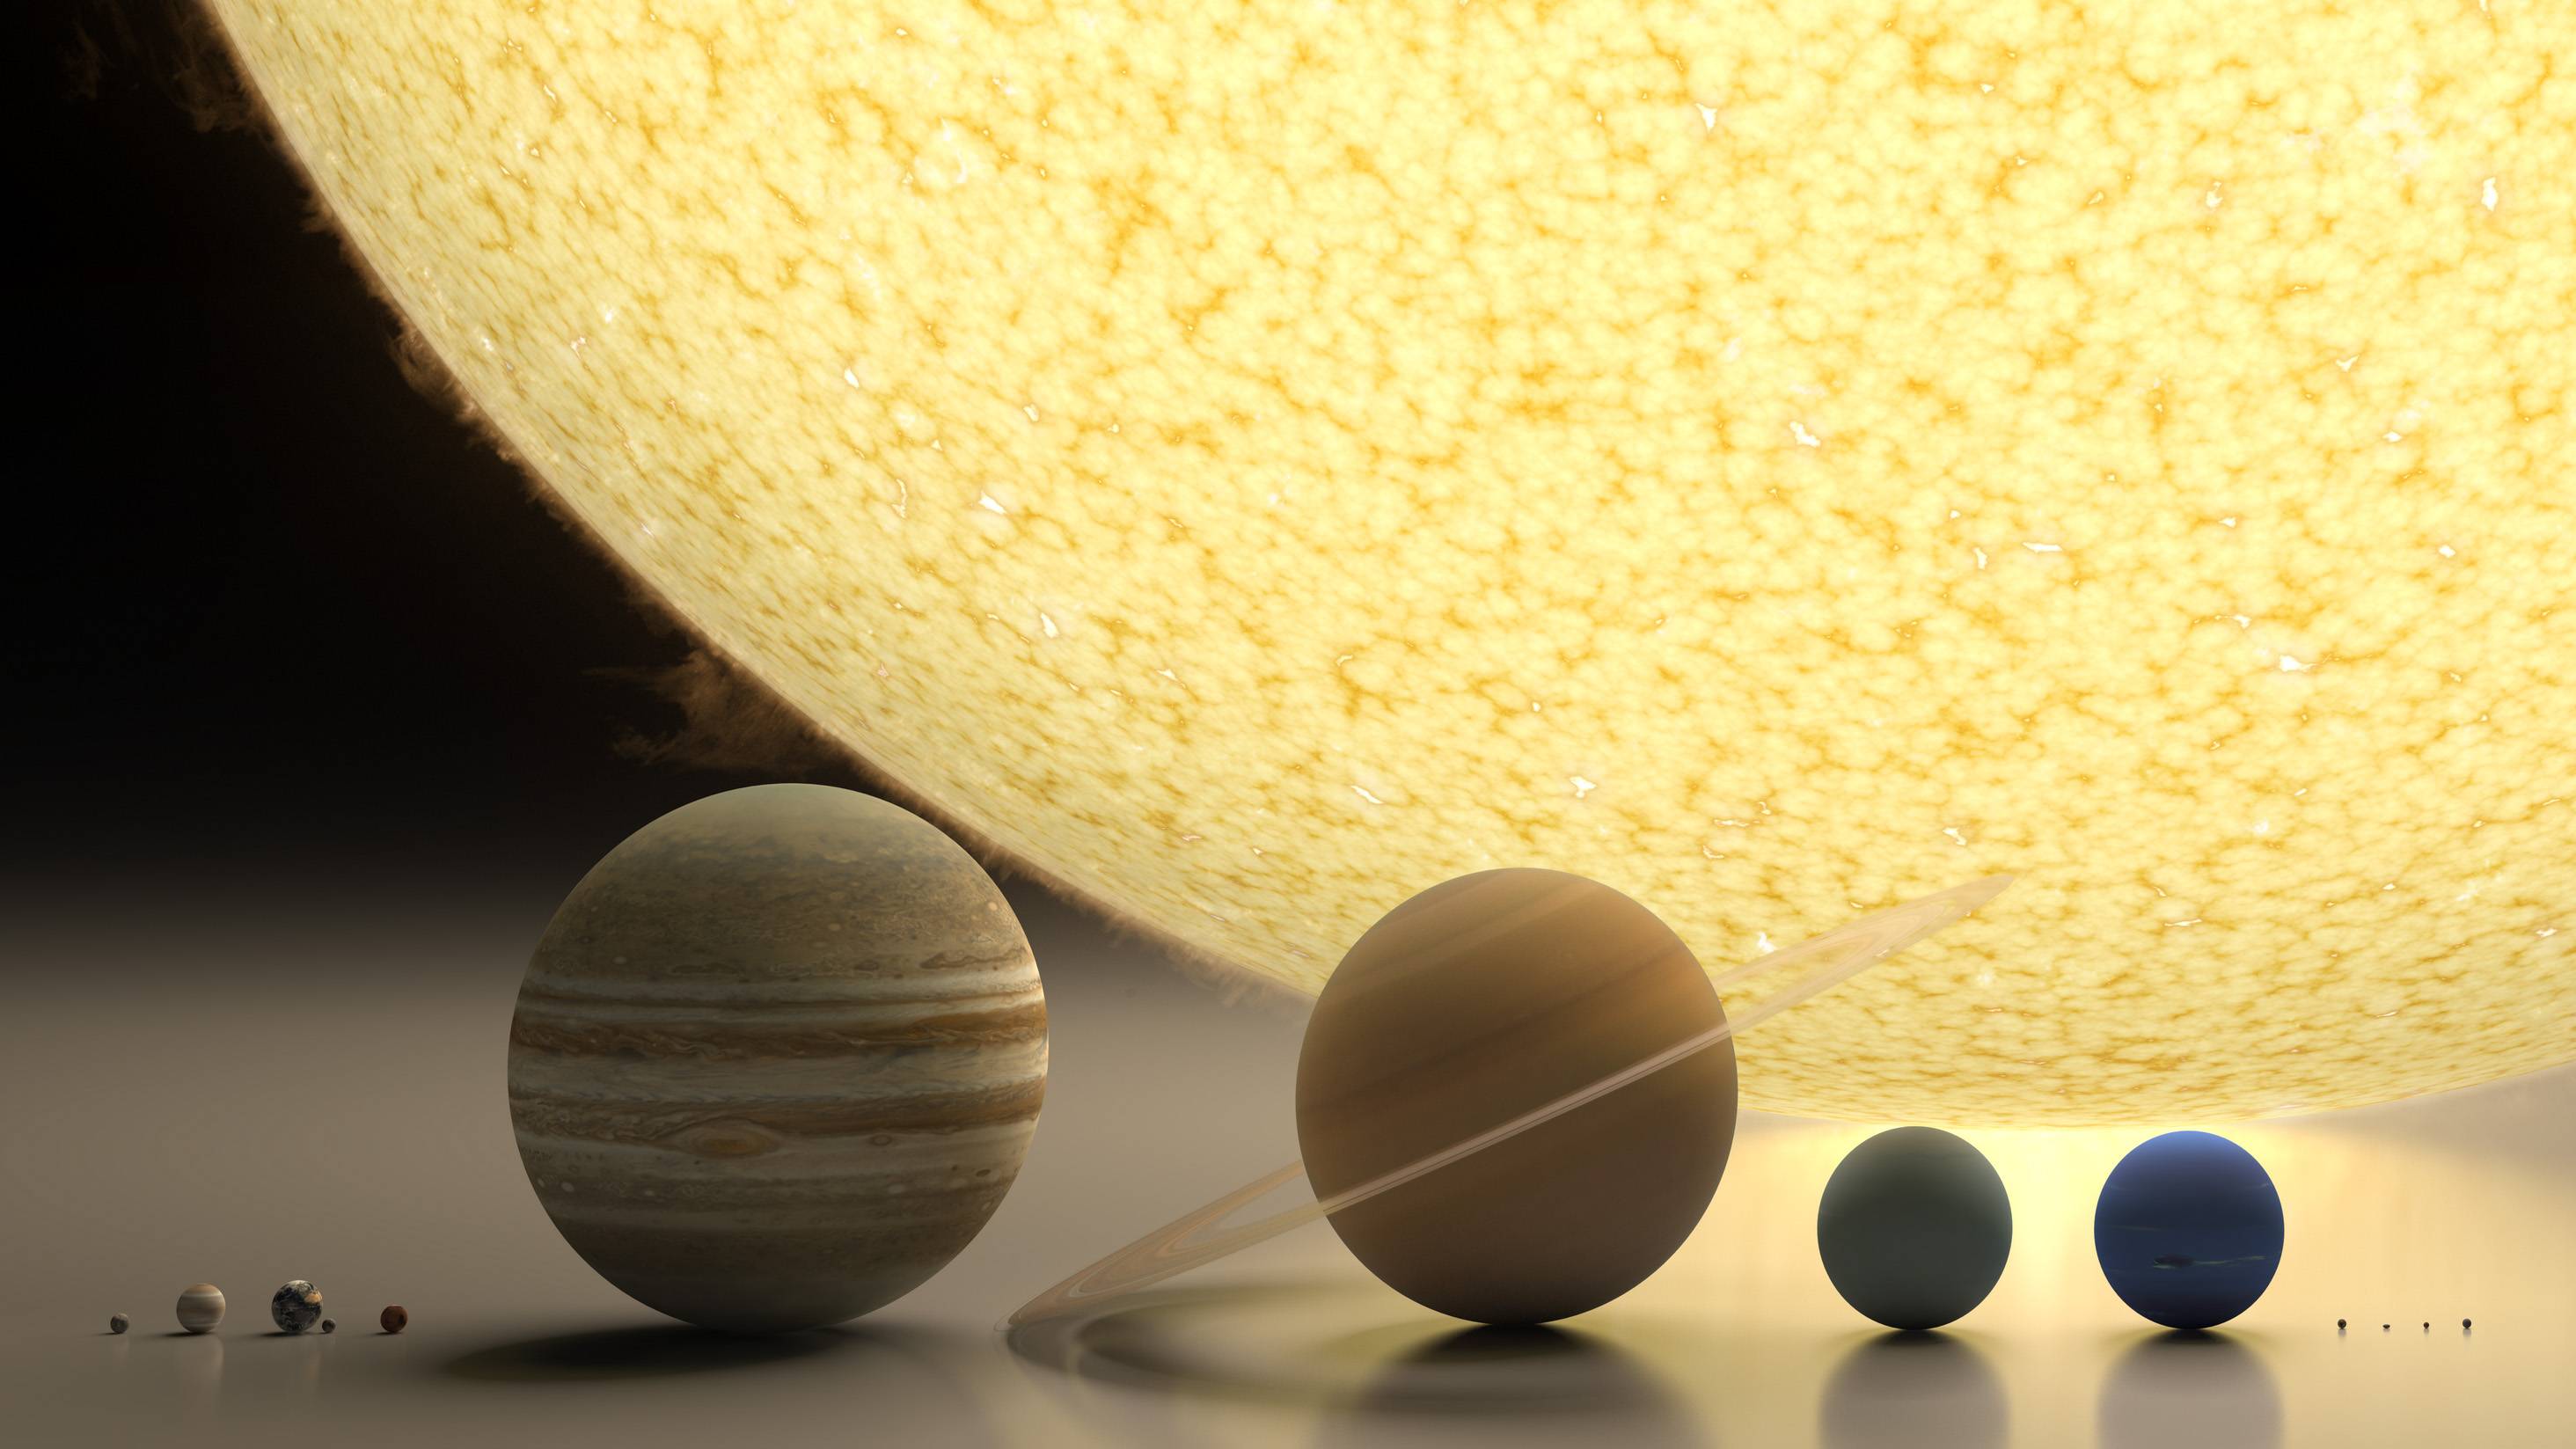 Solar System 3d Comparison Wallpaper | 2928x1647 | ID:52103